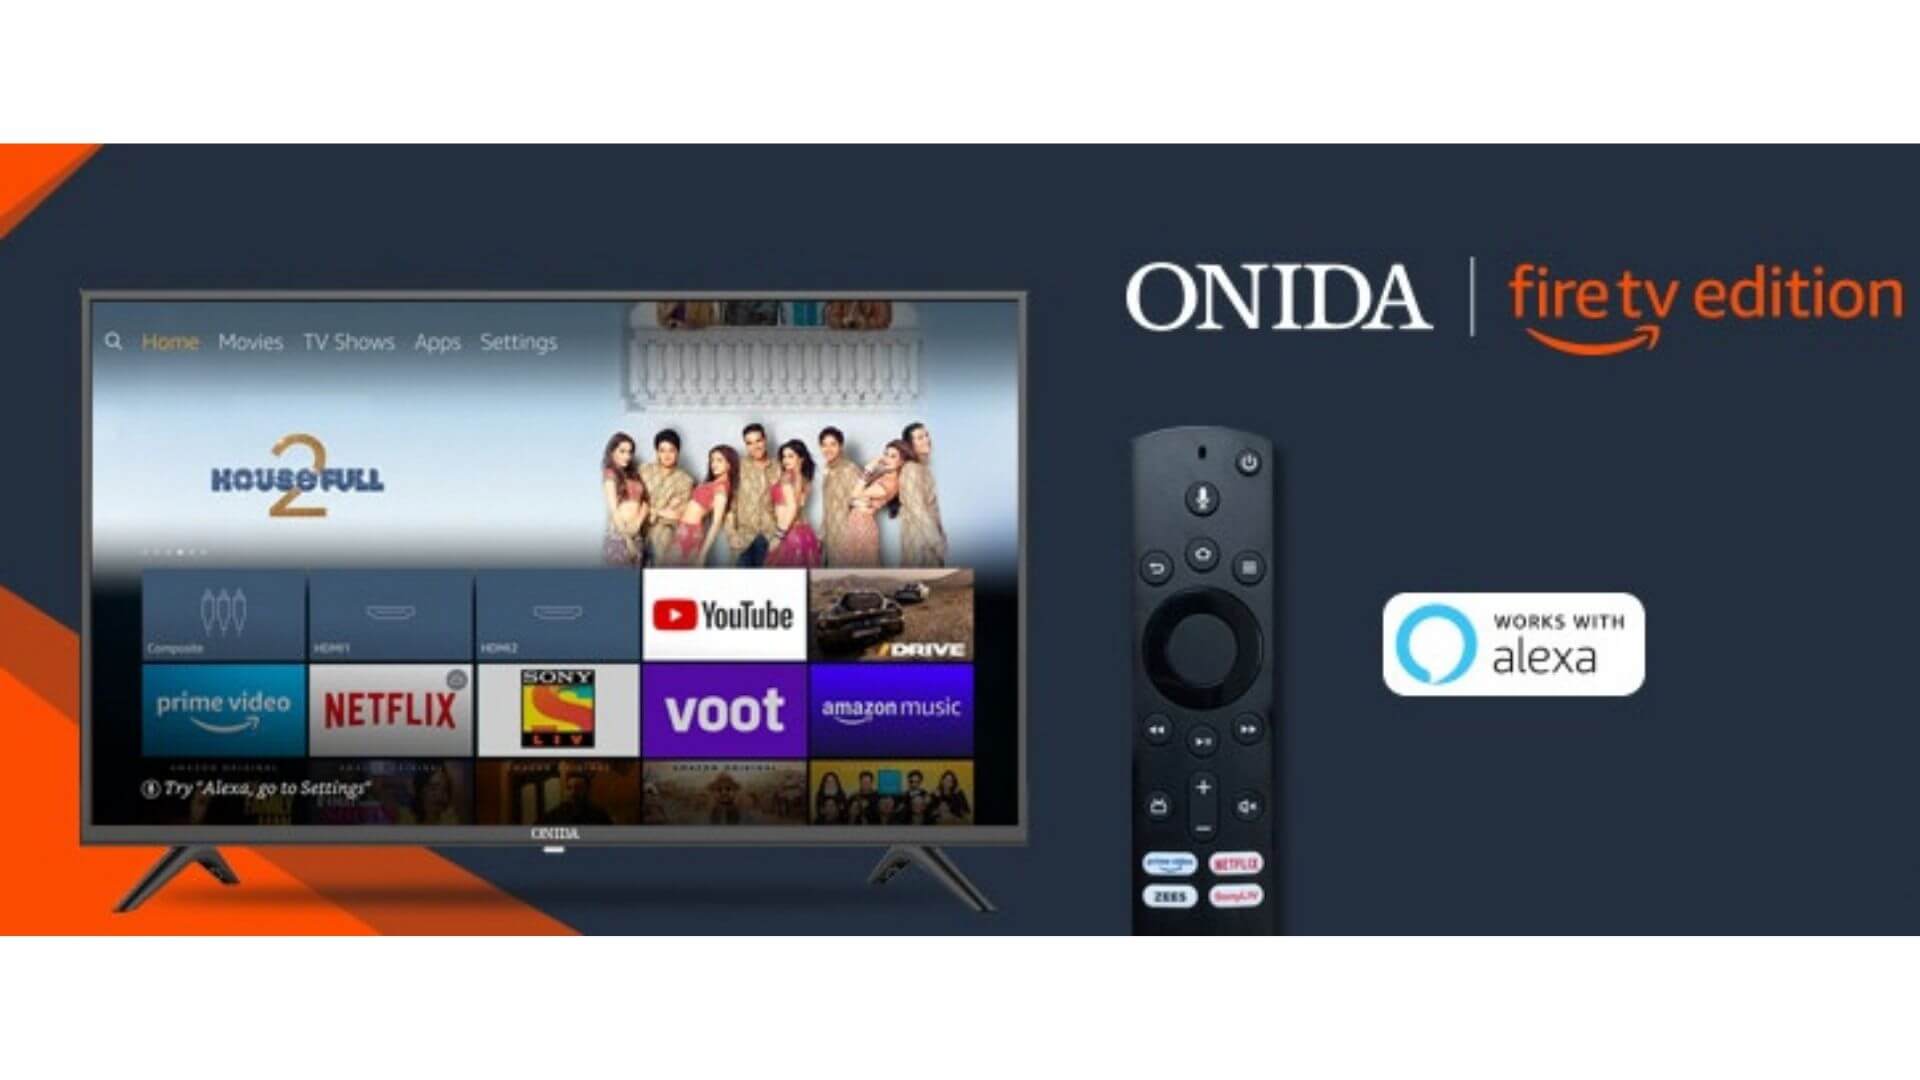 Onida Fire TV Edition